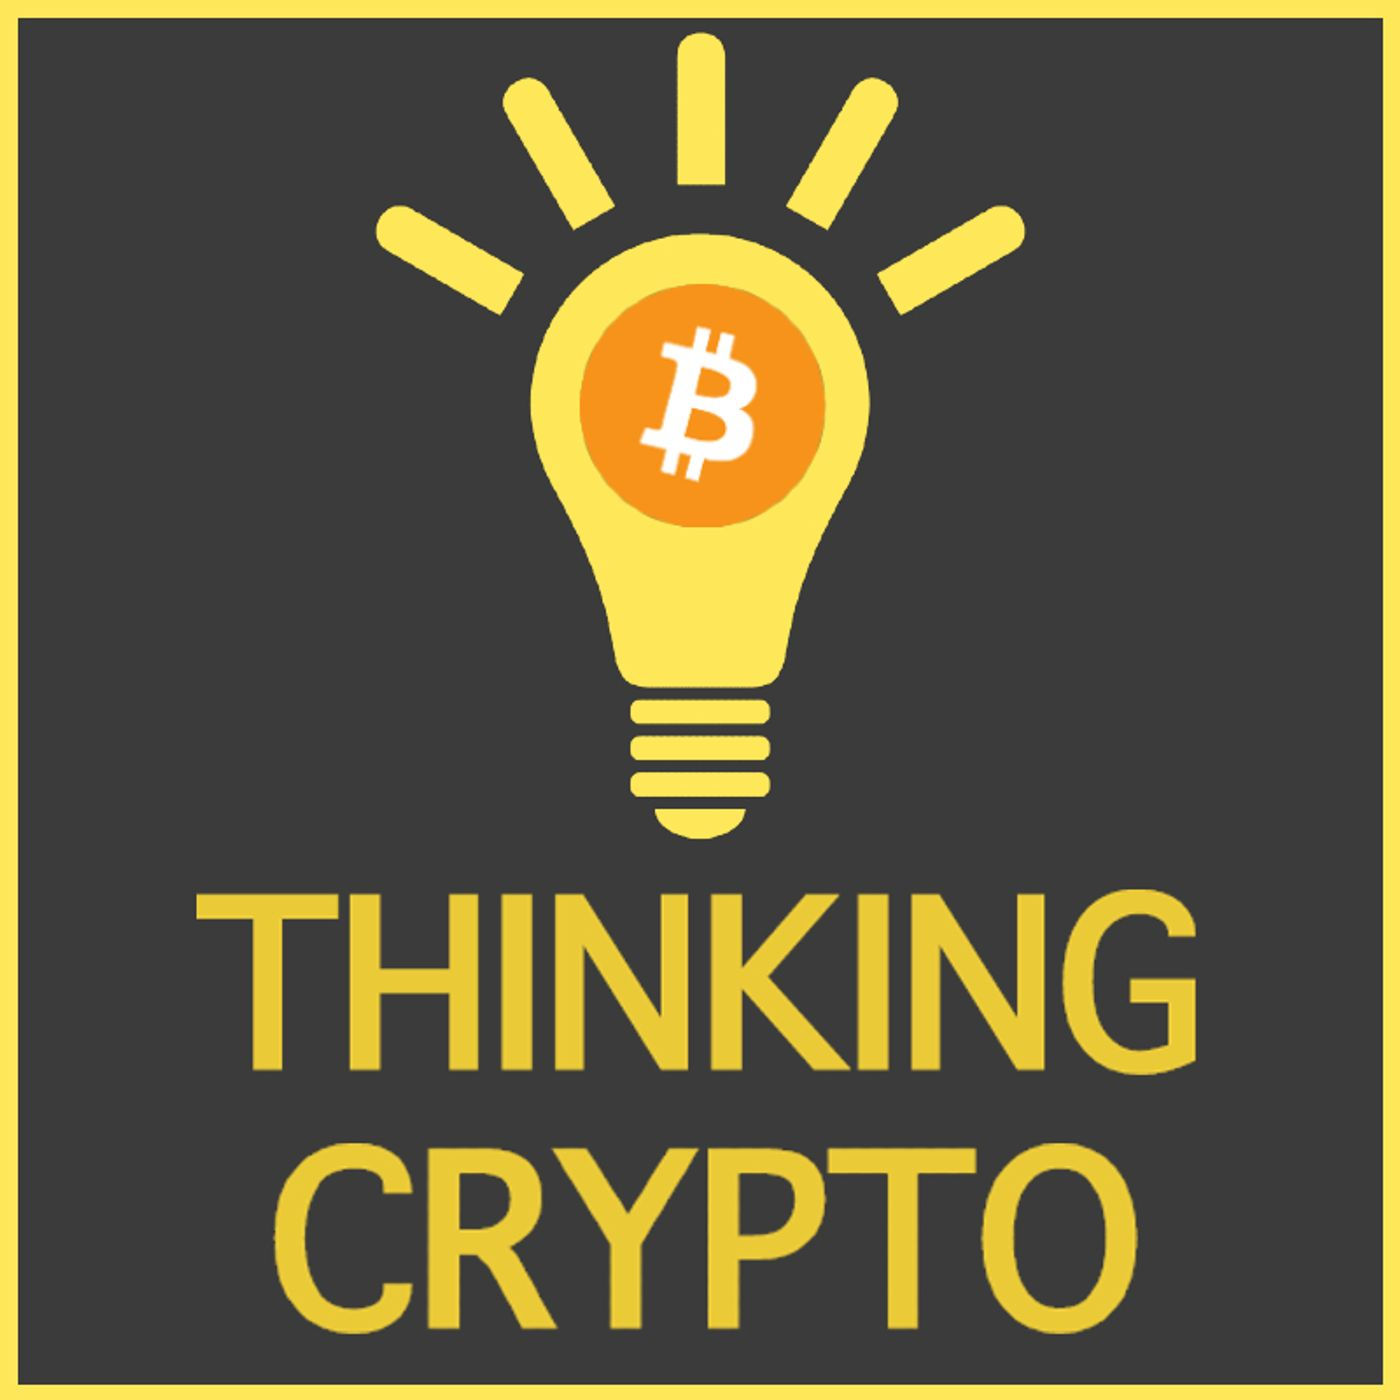 A highlight from Roger Ver Interview - Bitcoin Cash vs Bitcoin, Future of Crypto, FTX, Ripple, Privacy Coins & CBDCs